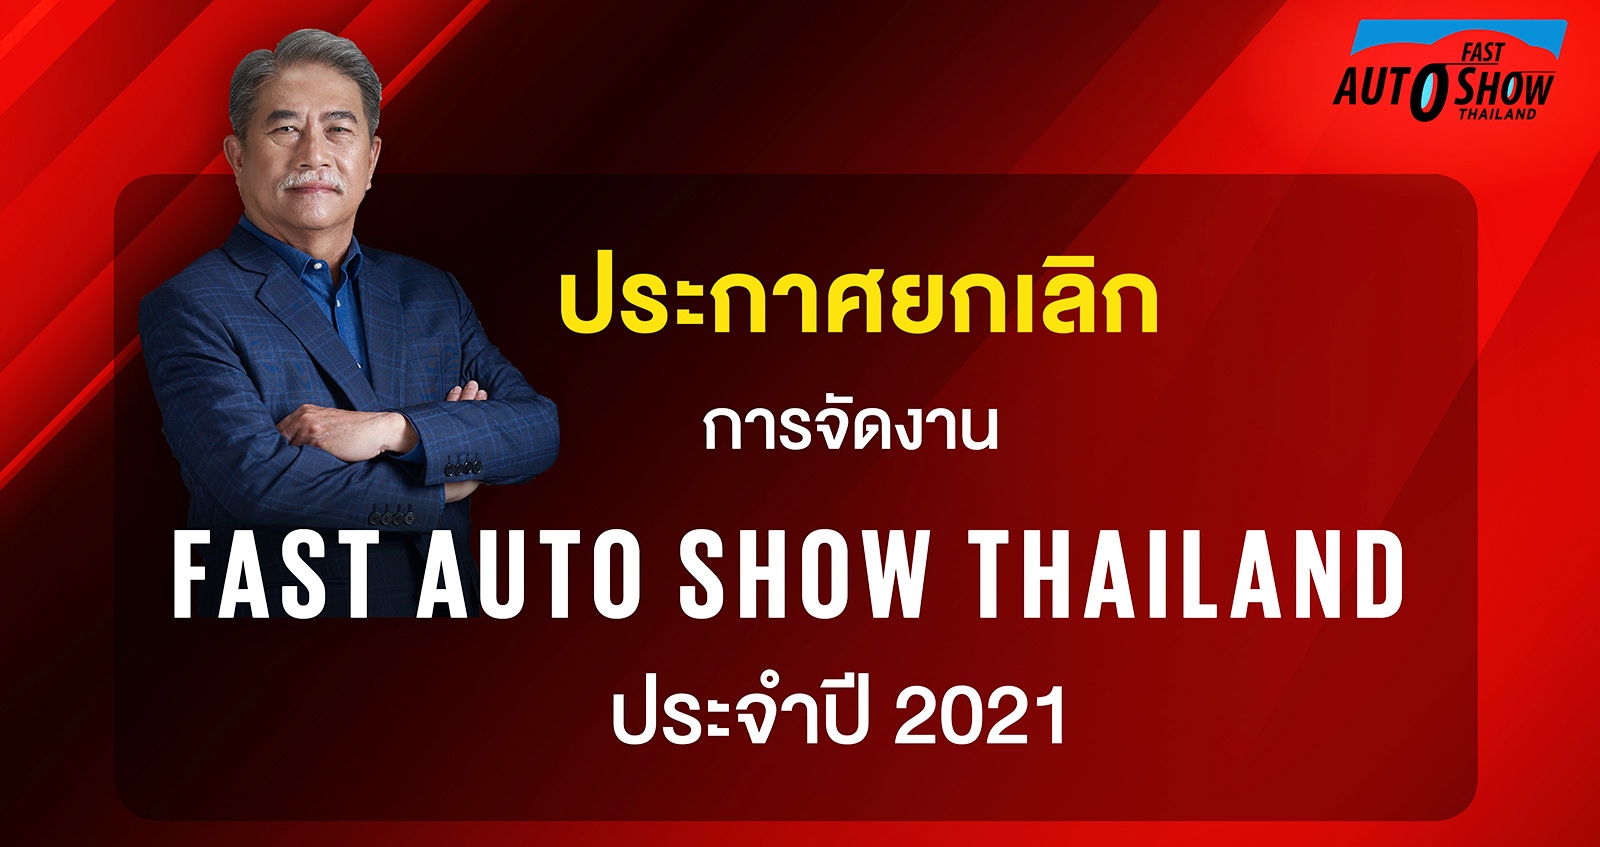 Fast Auto Show Thailand 2021 ประกาศยกเลิก